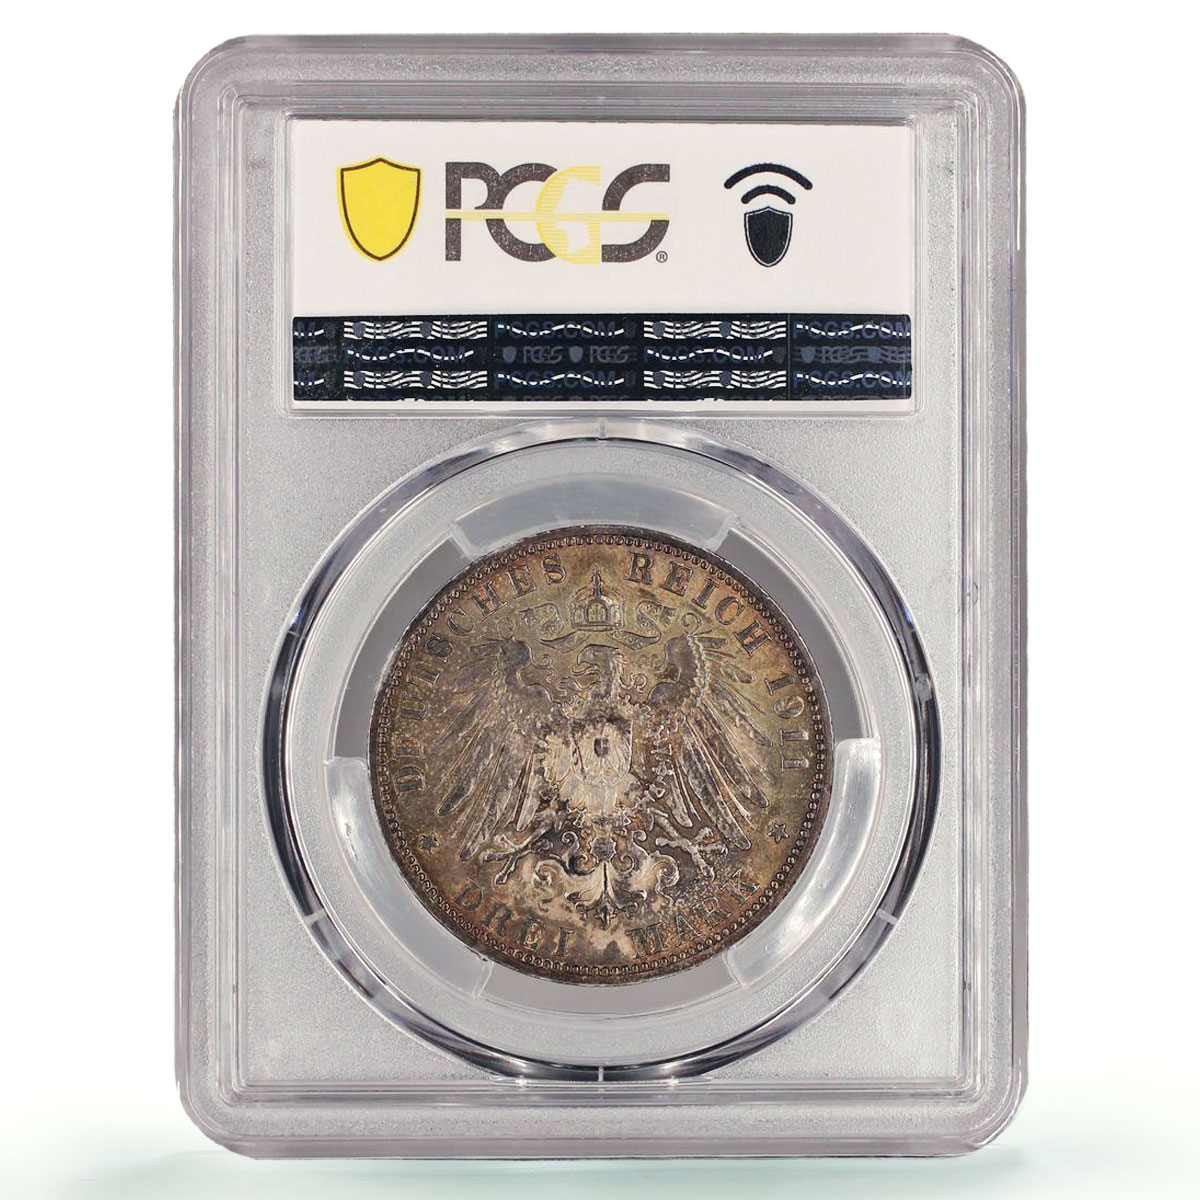 Germany Hamburg 3 mark Regular Coinage Hanseatic City MS64 PCGS silver coin 1911